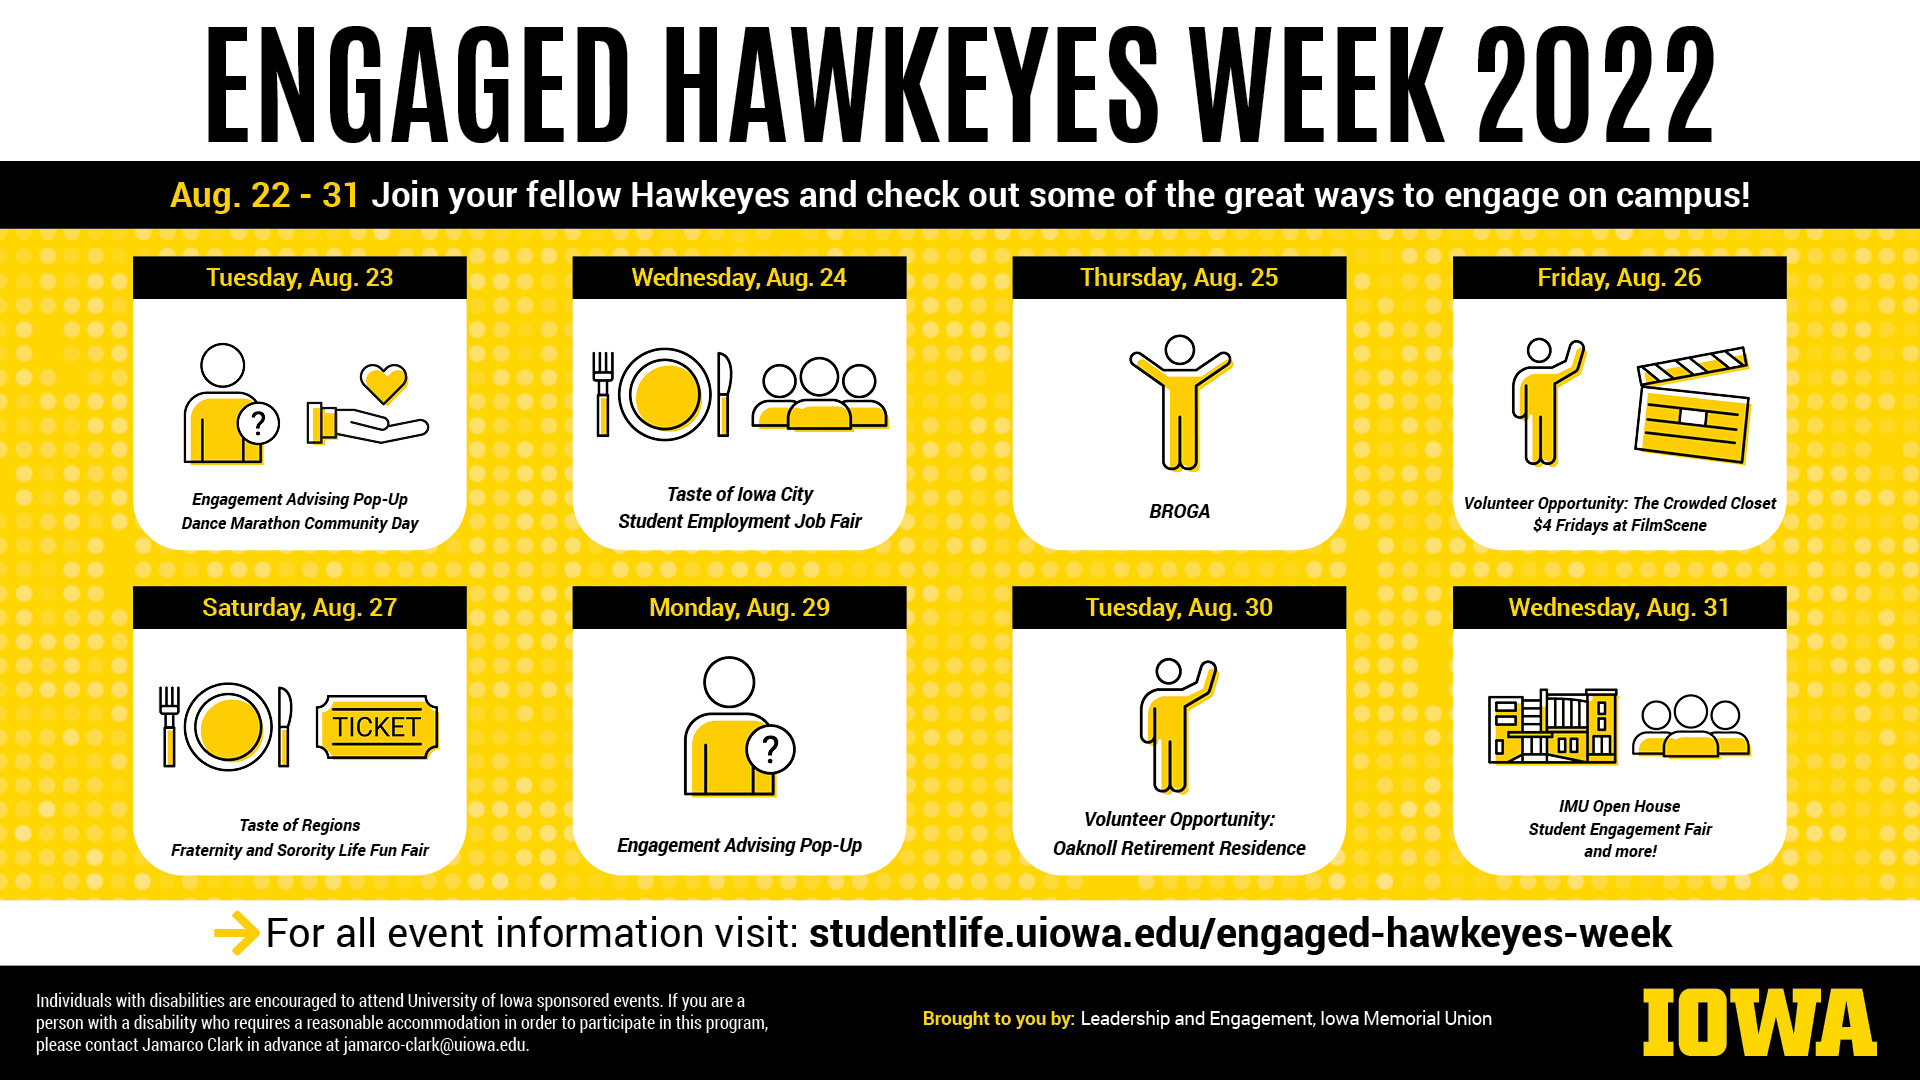 For all event information, visit studentlife.uiowa.edu/engaged-hawkeyes-week